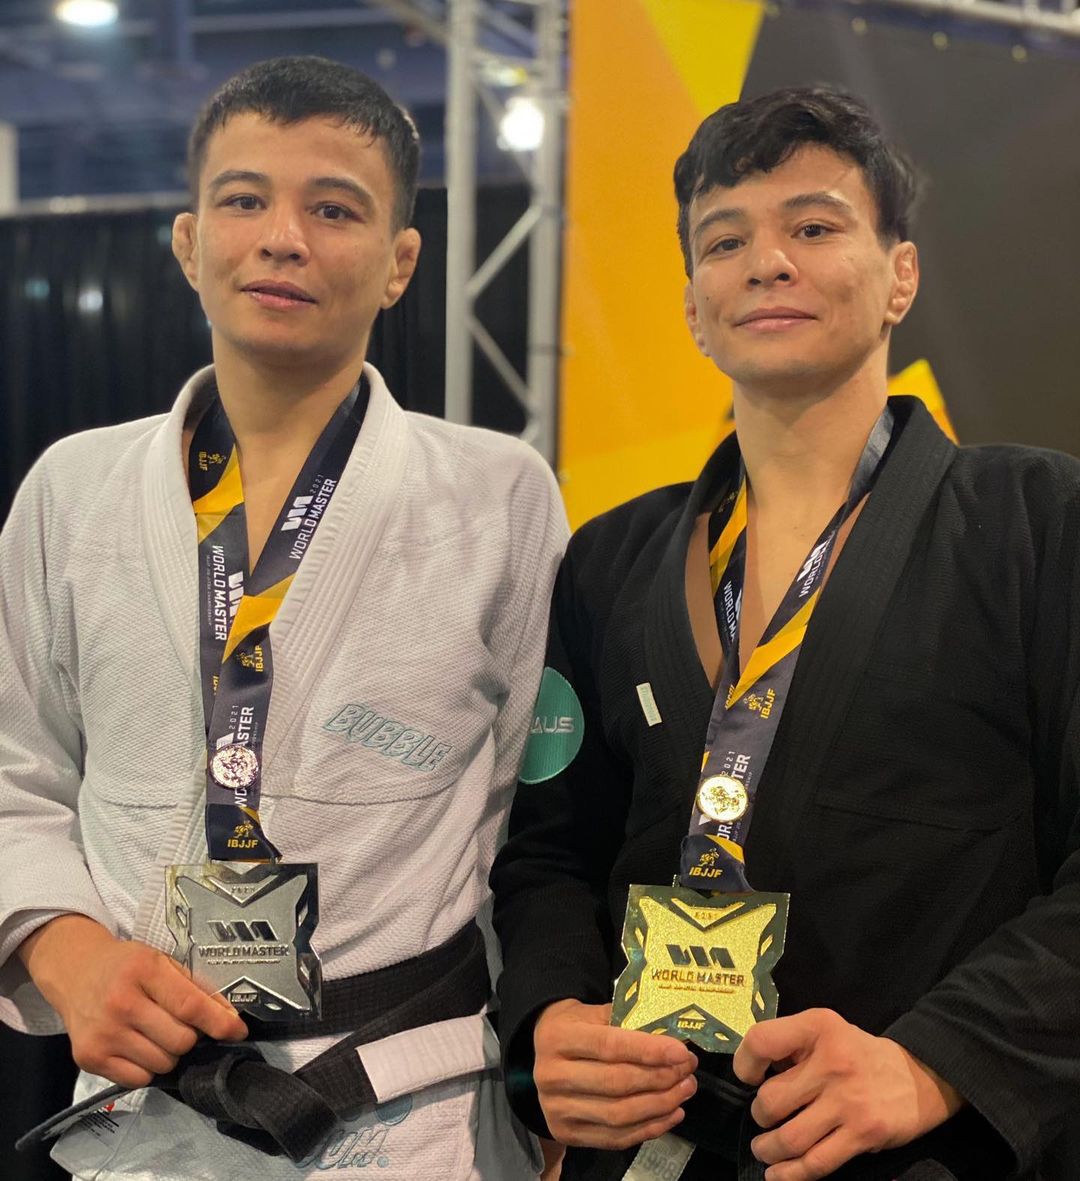 Craques do time GMI brilham no Mundial Master de Jiu-Jitsu 2021